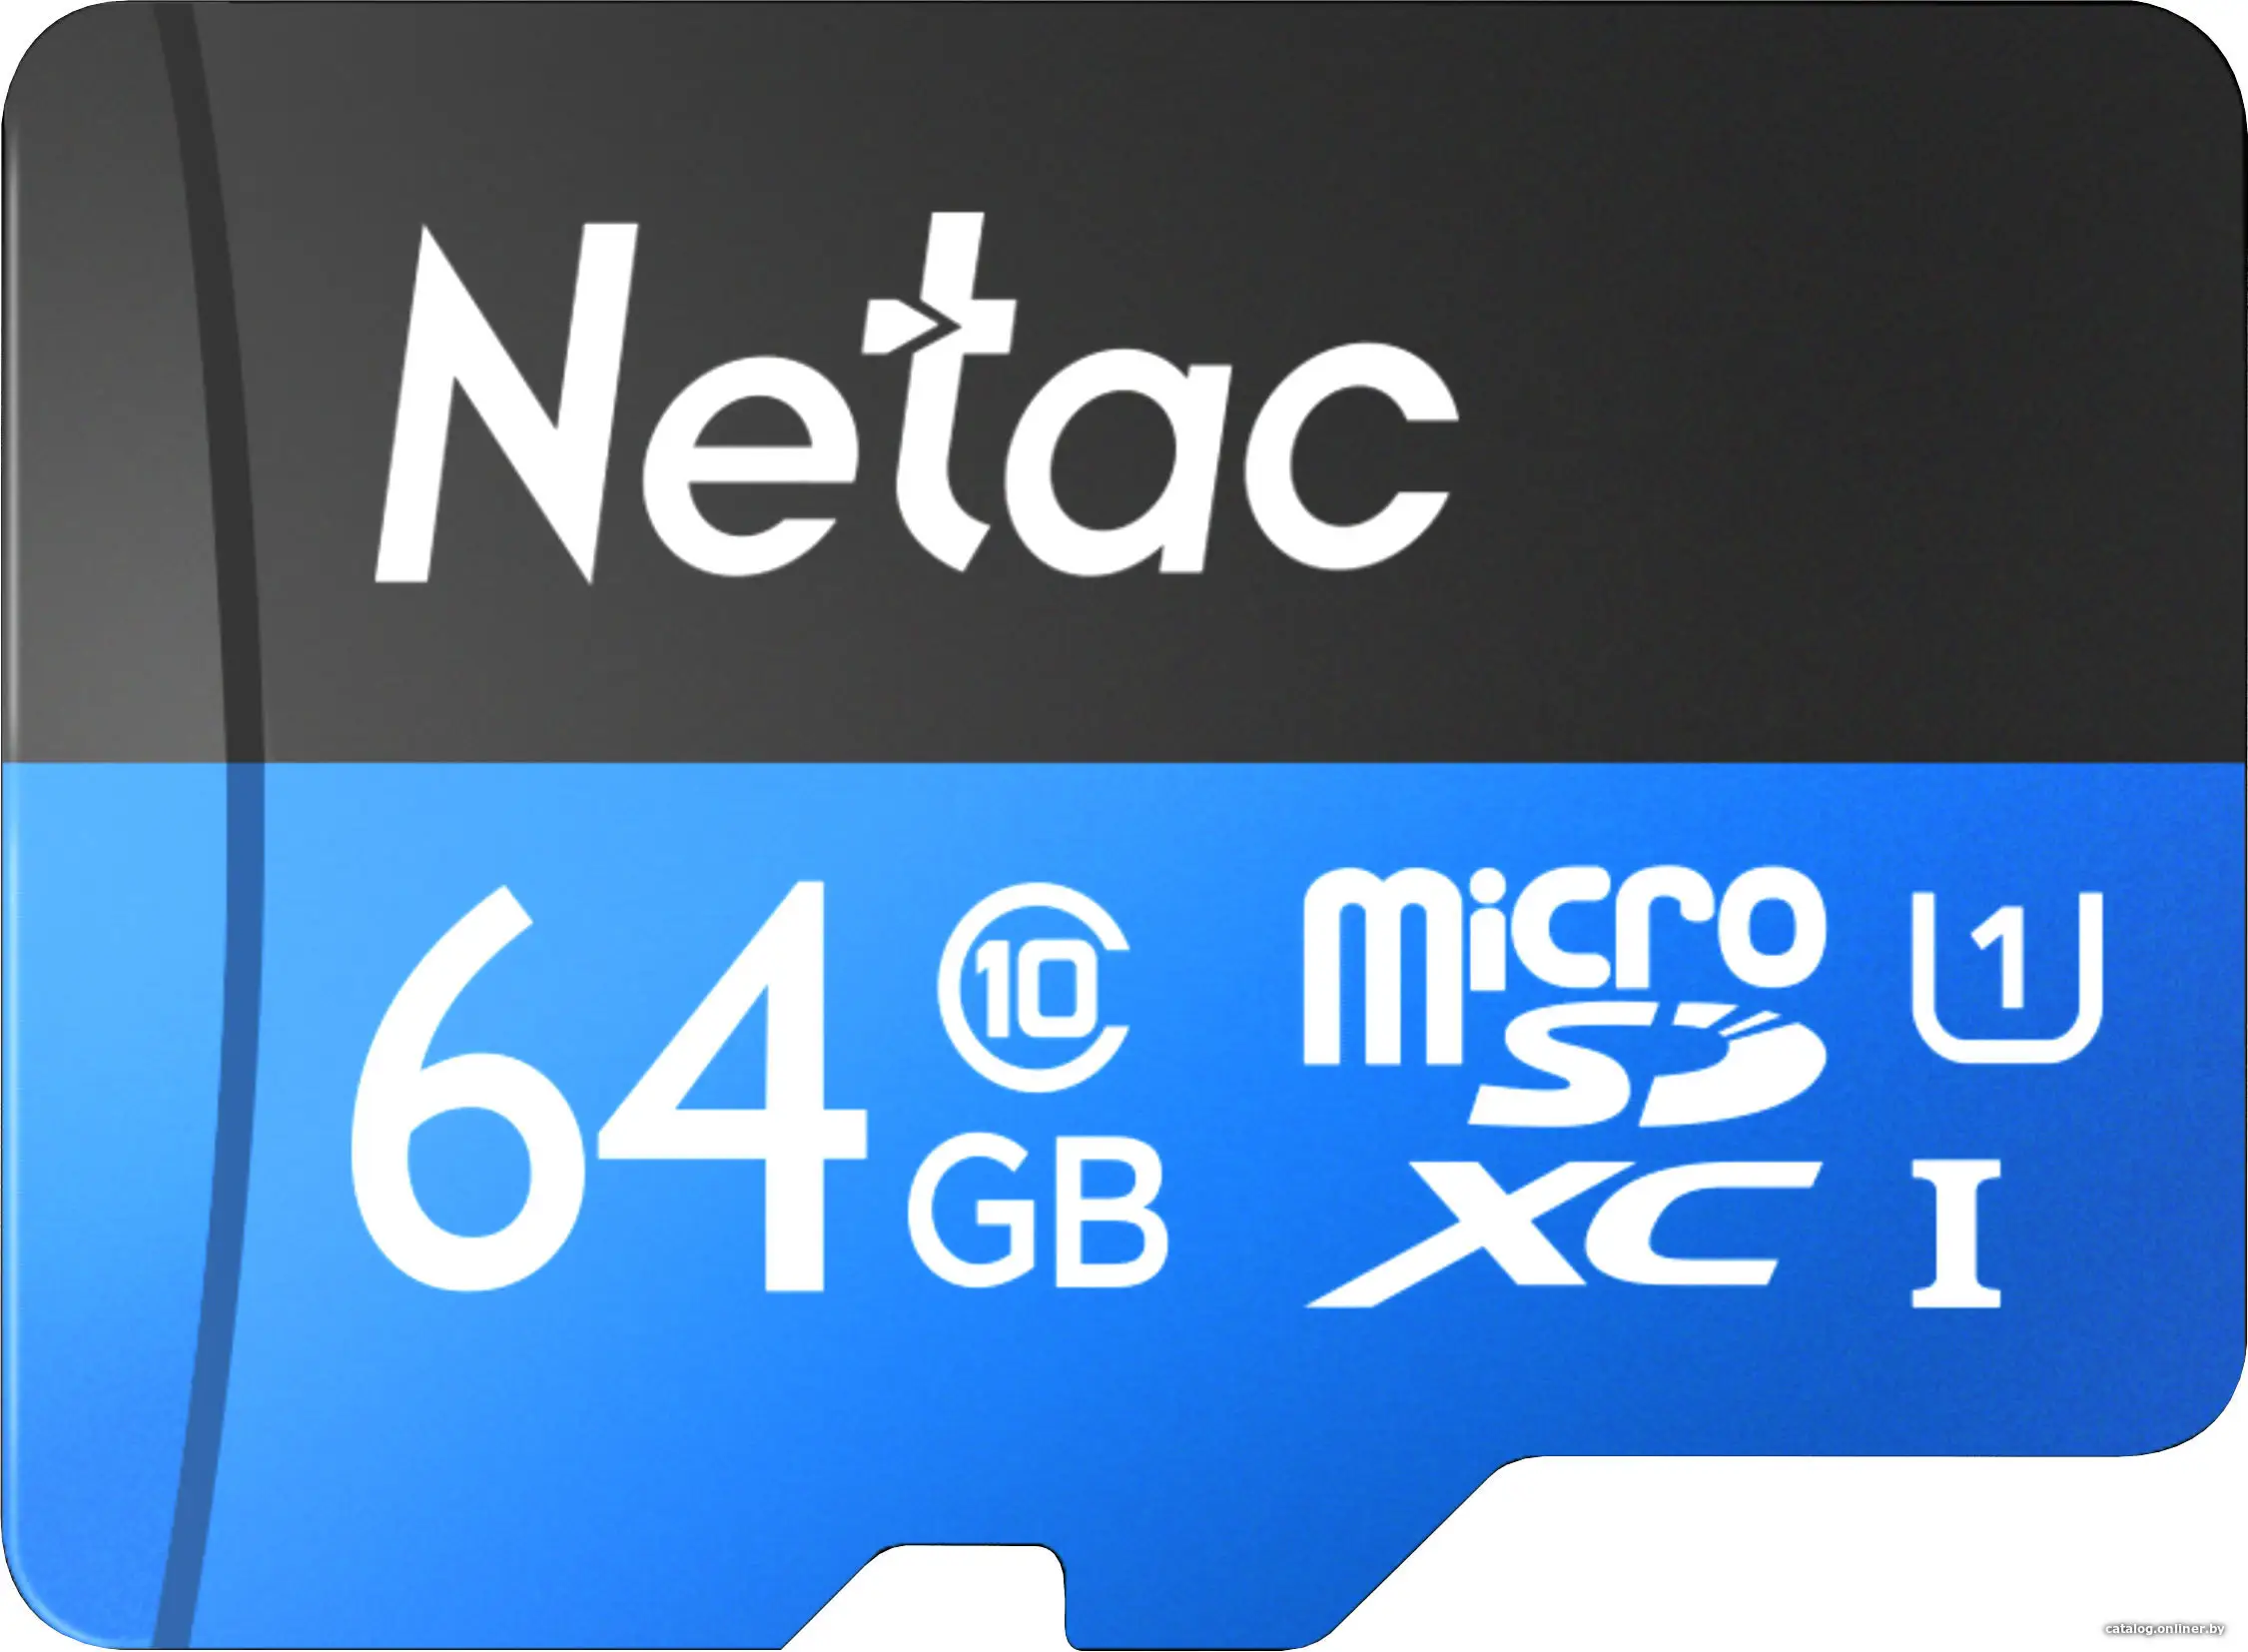 Купить Netac MicroSD card P500 Standard 64GB, bulk version, цена, опт и розница